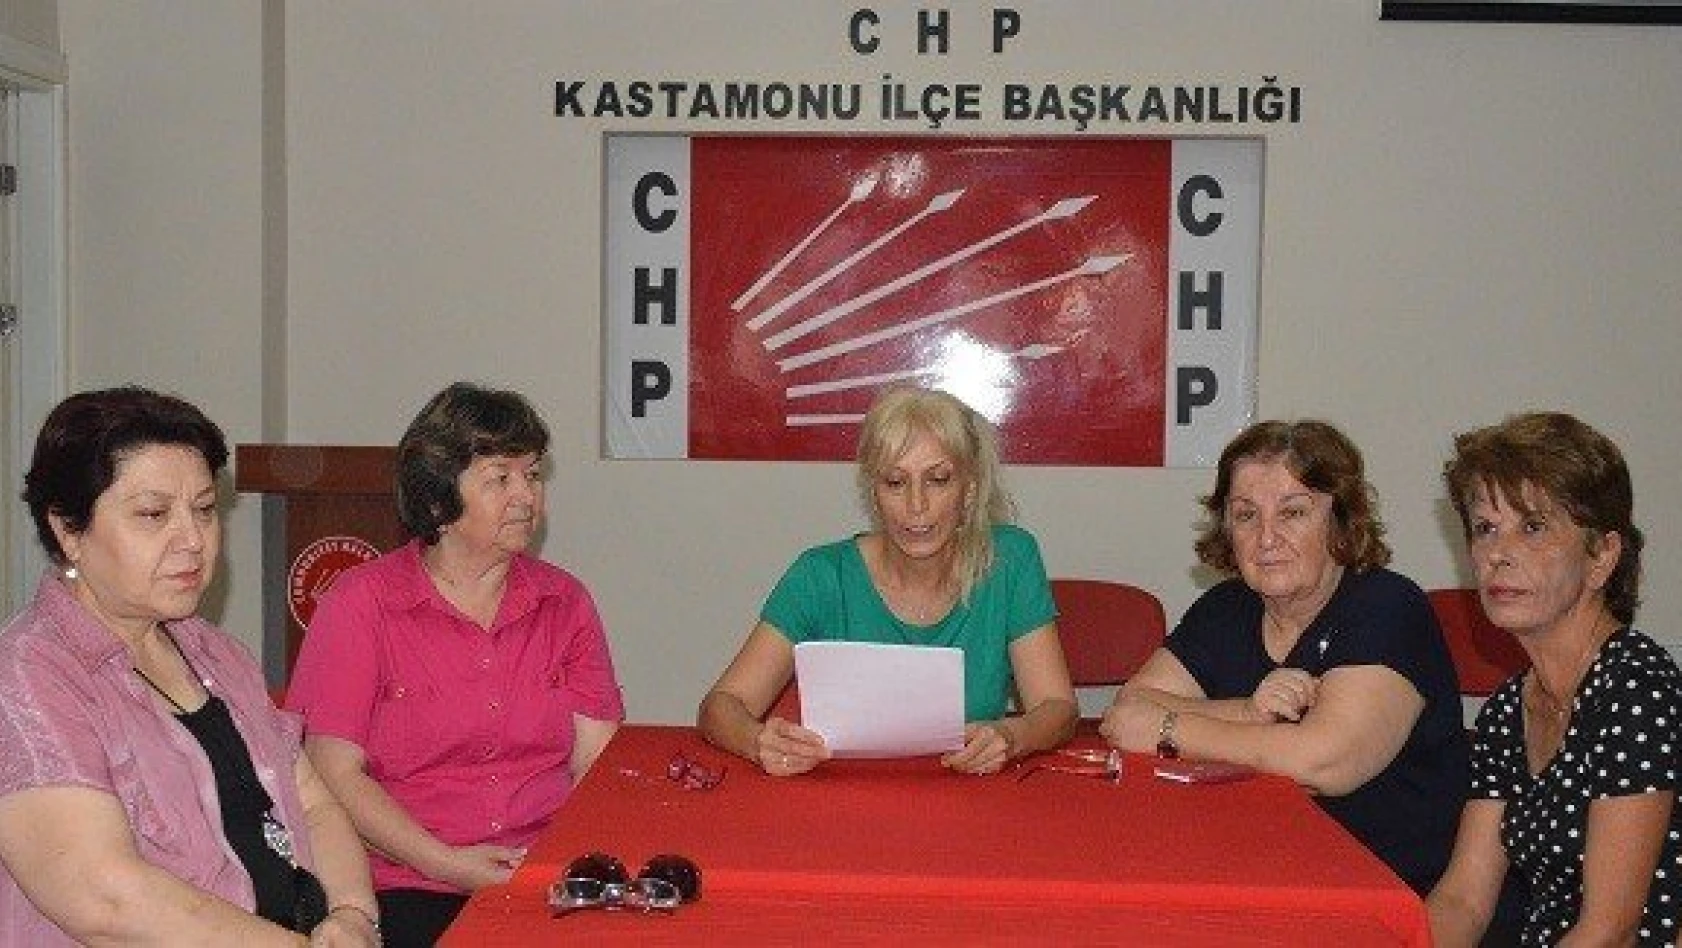 CHP'li kadınlardan ortak ses